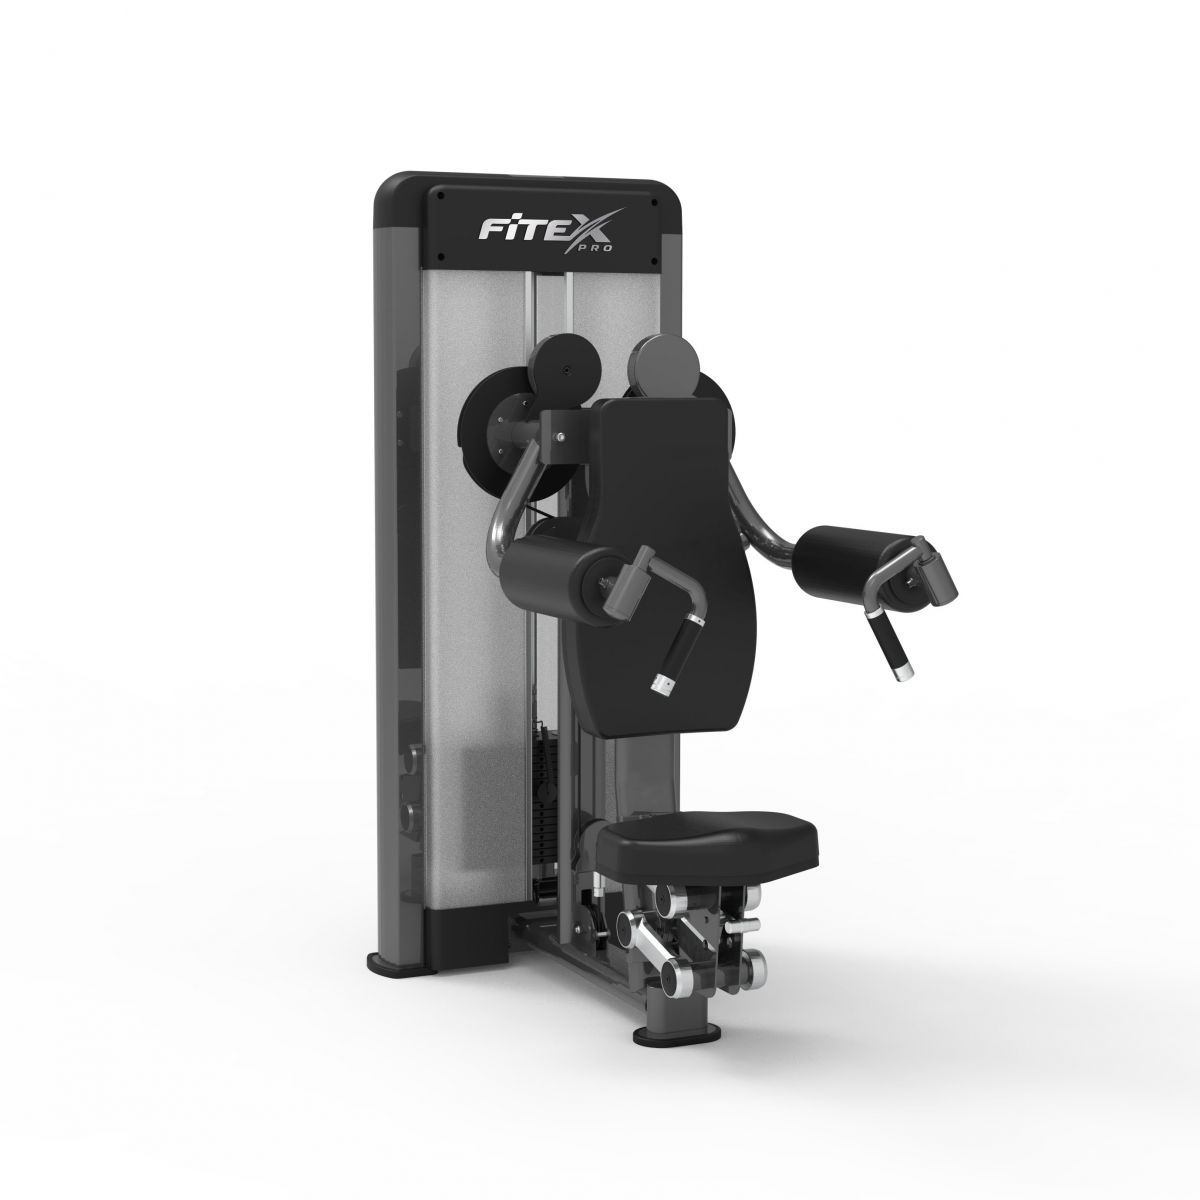 Дельта машина Fitex Pro FTX-61F03 1200_1200